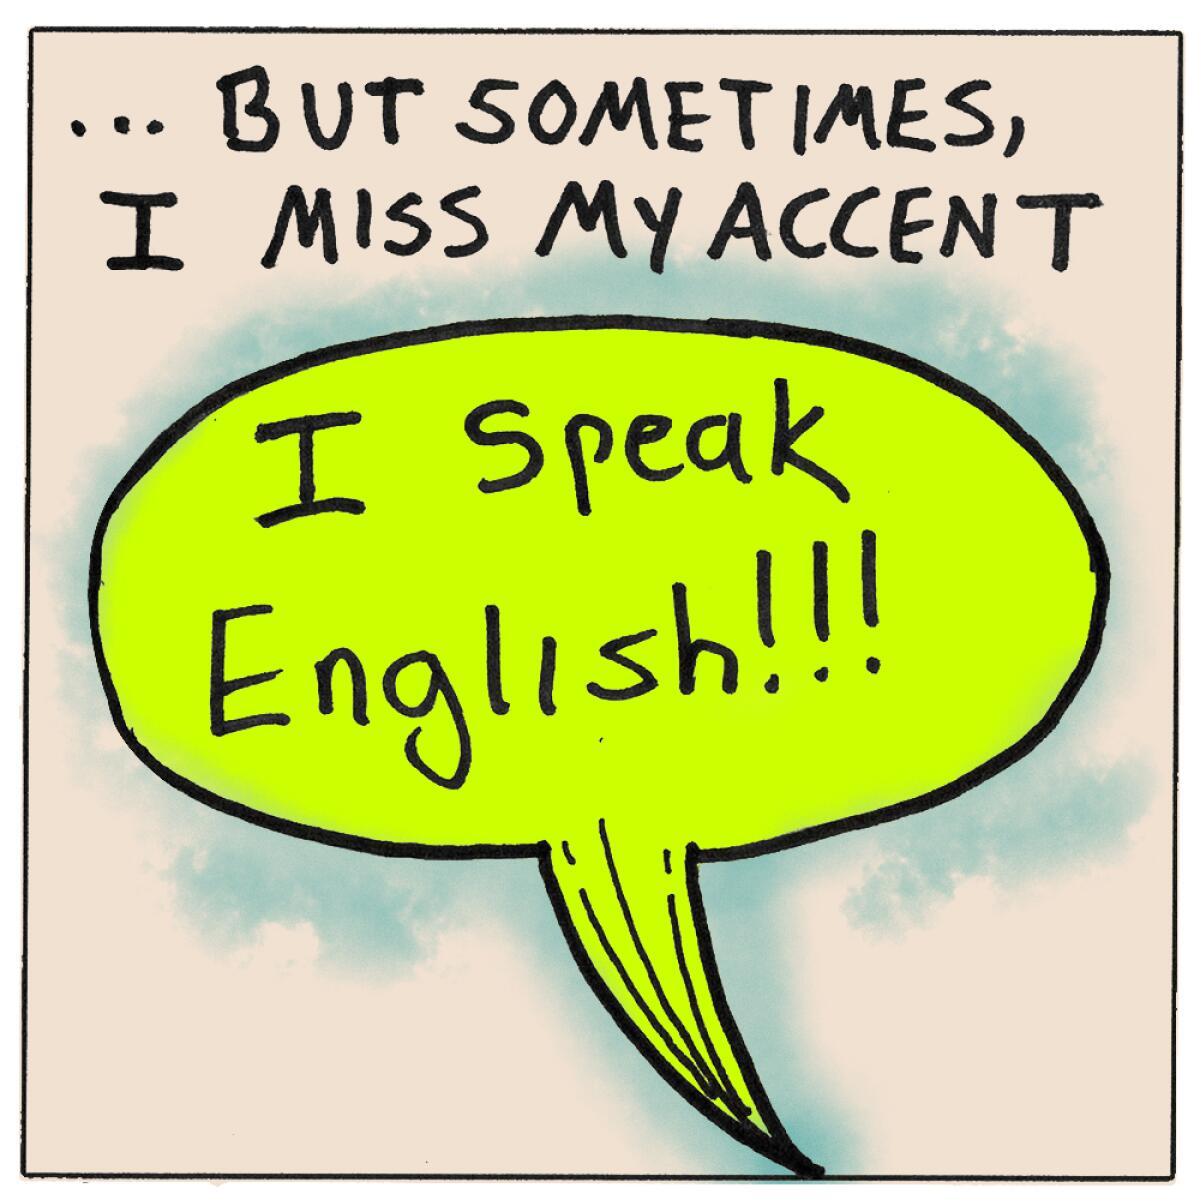 But sometimes I miss my accent. "I speak English!!!"